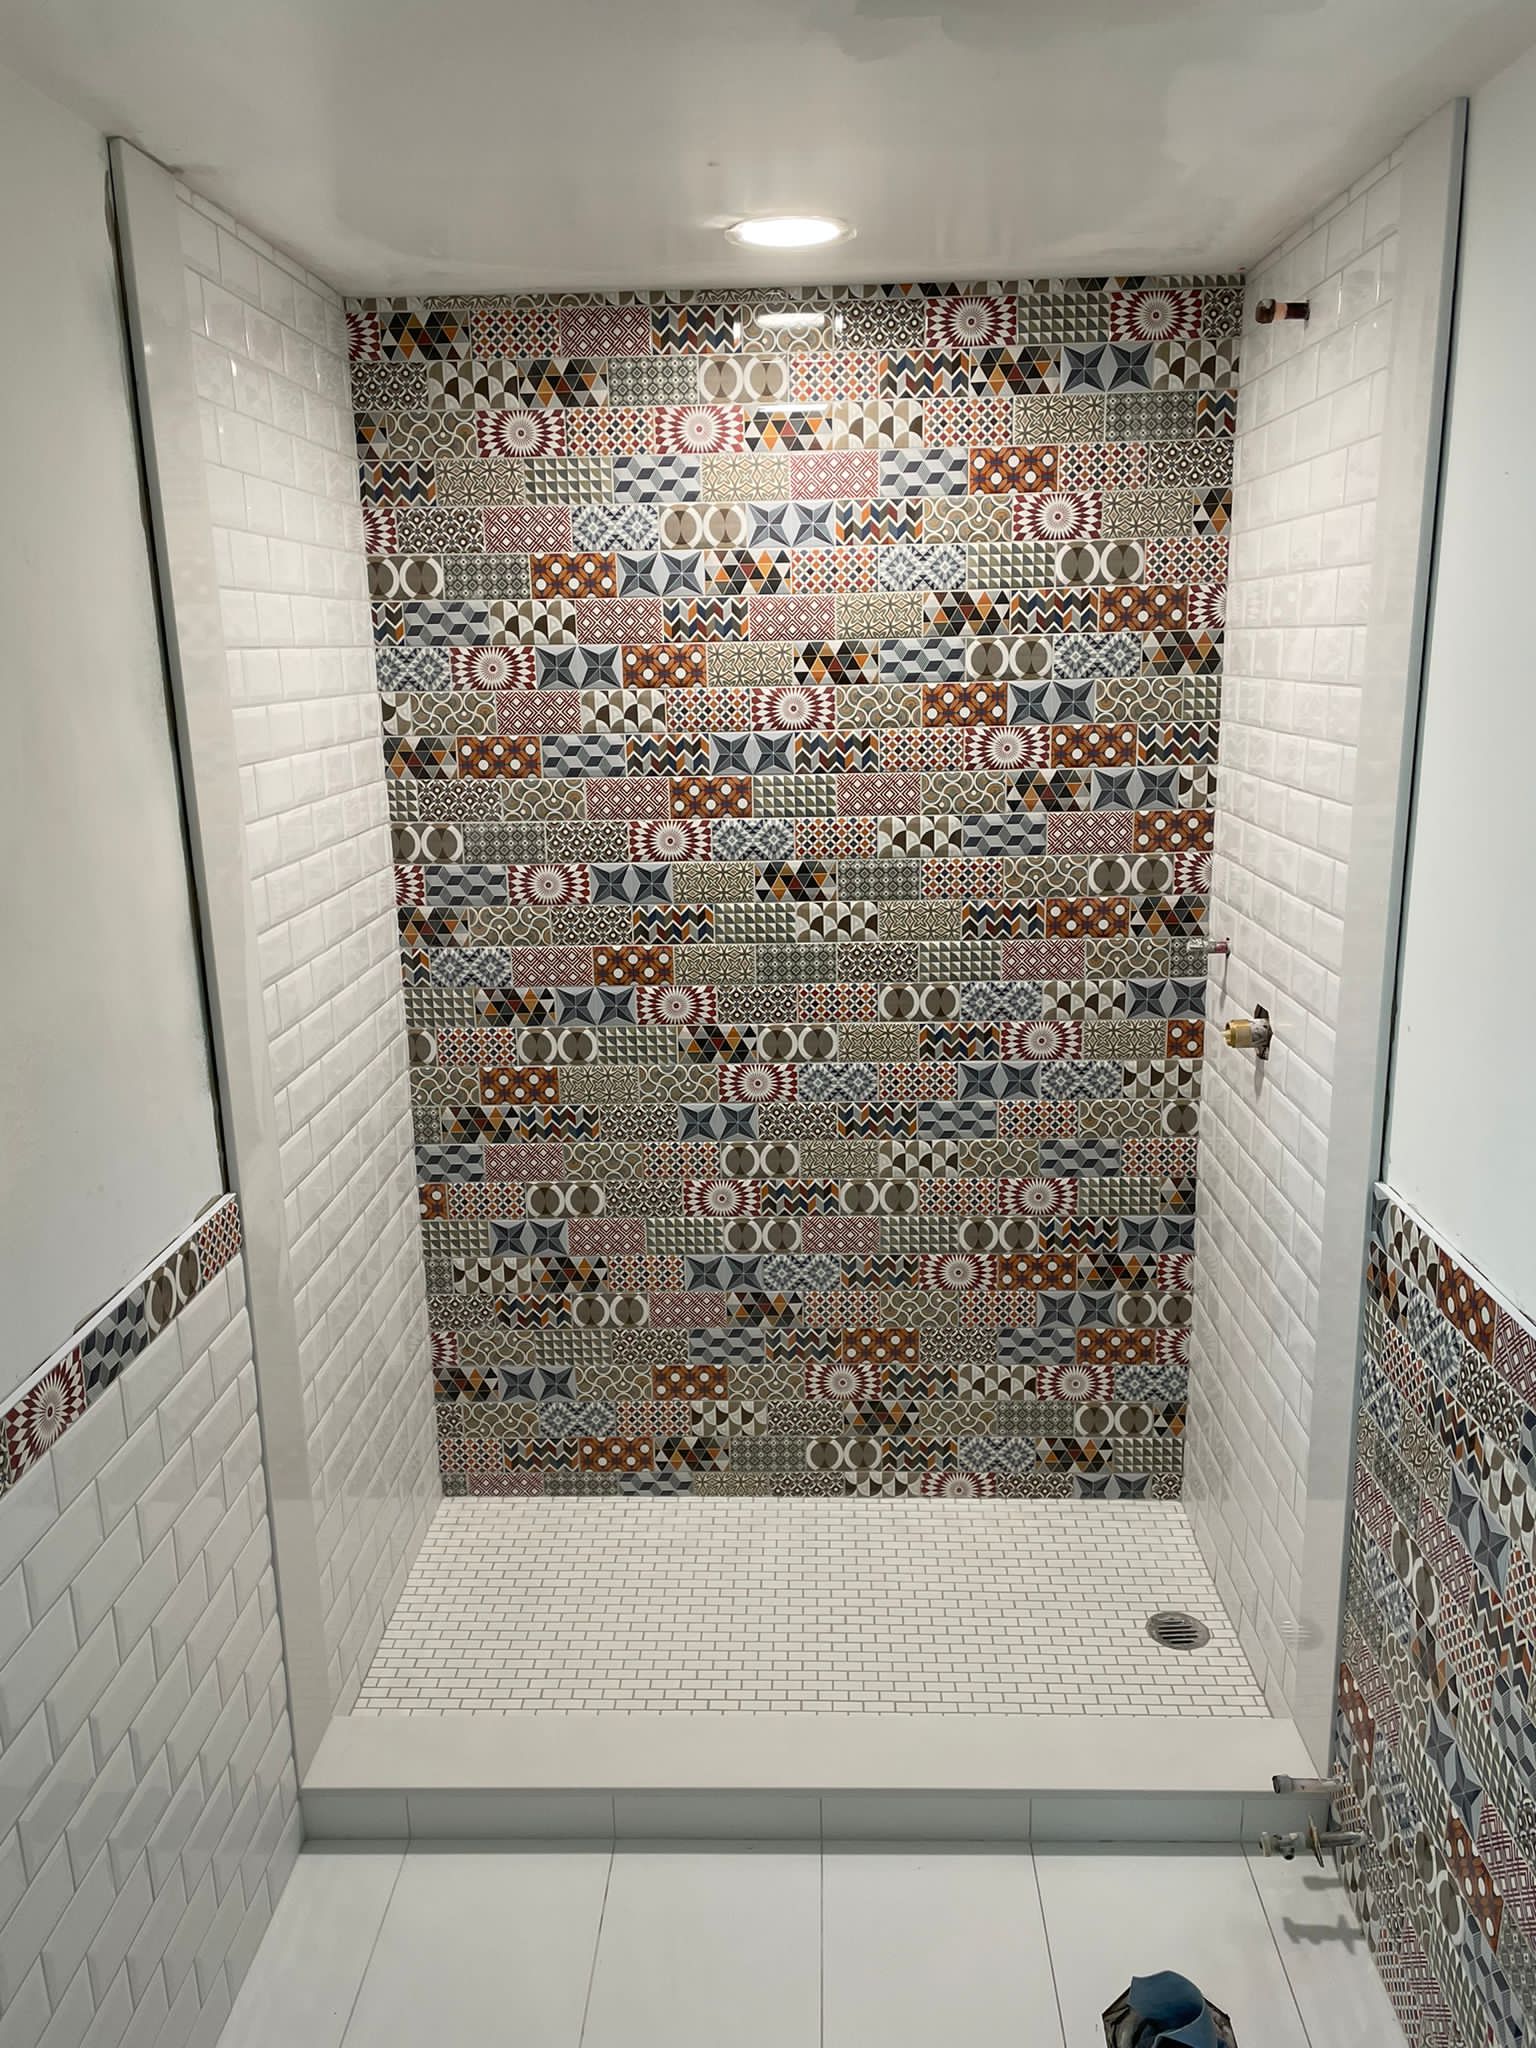 Brampton tiles installation at Markom Tiles